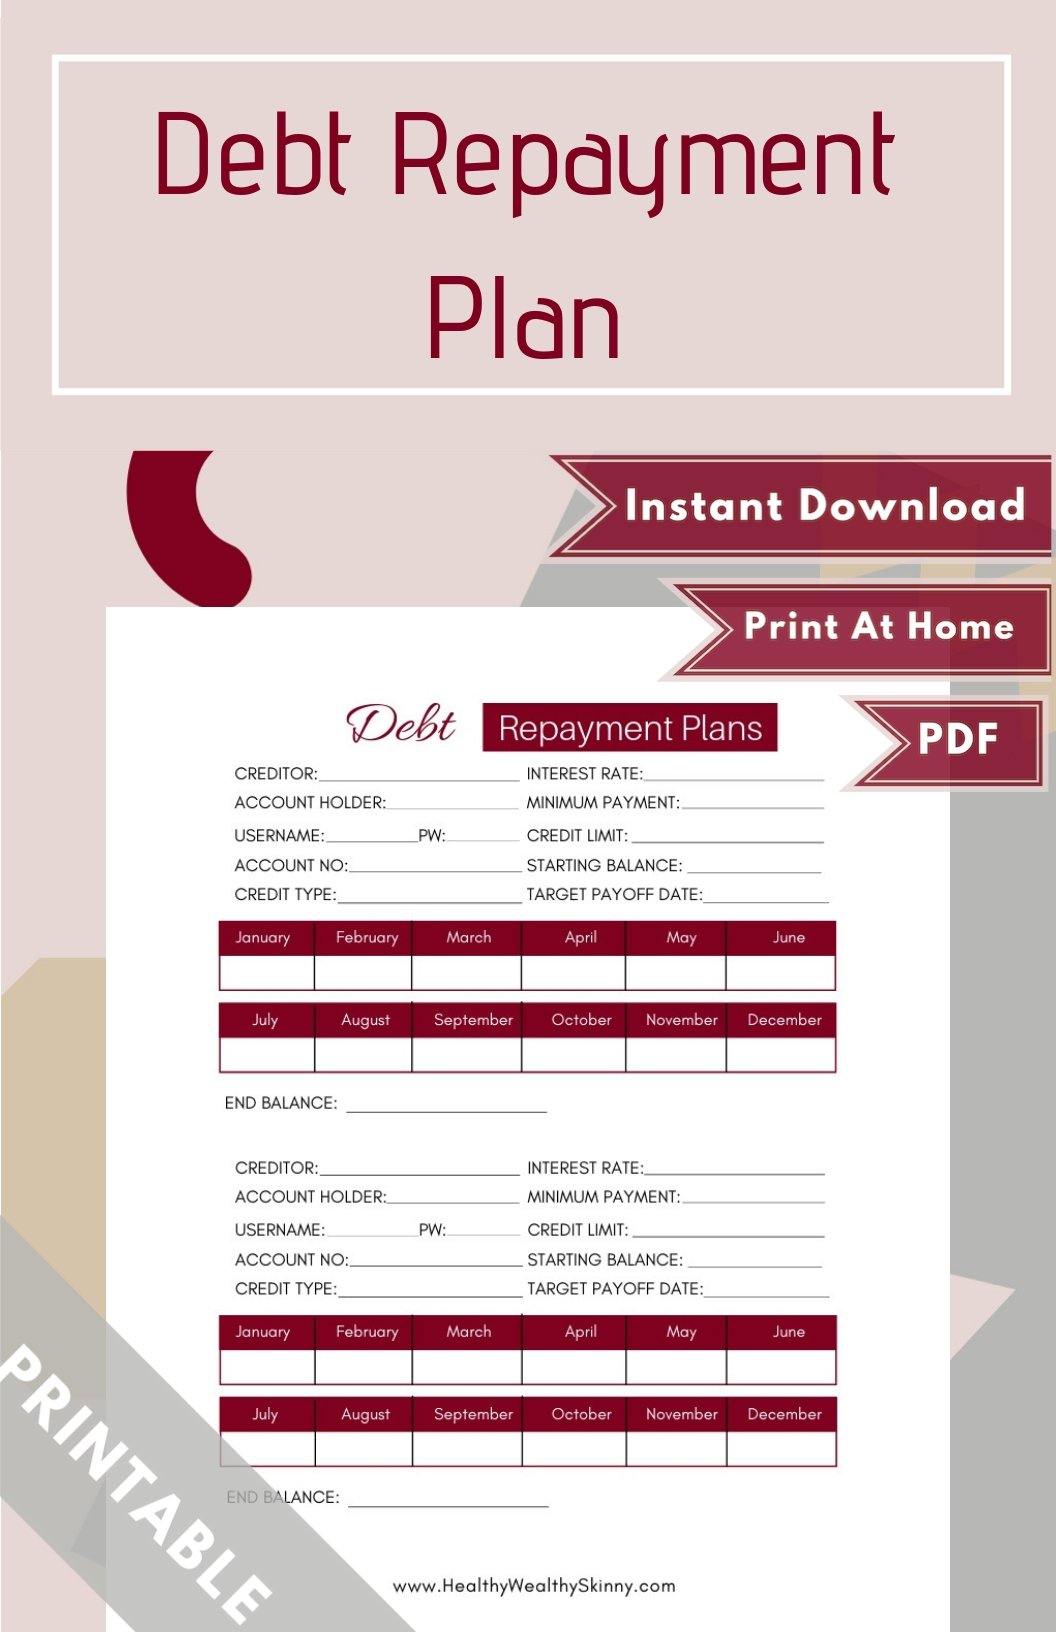 Debt Repayment Plan Worksheet PDF (Available in Various Colors) - Healthy Wealthy Skinny